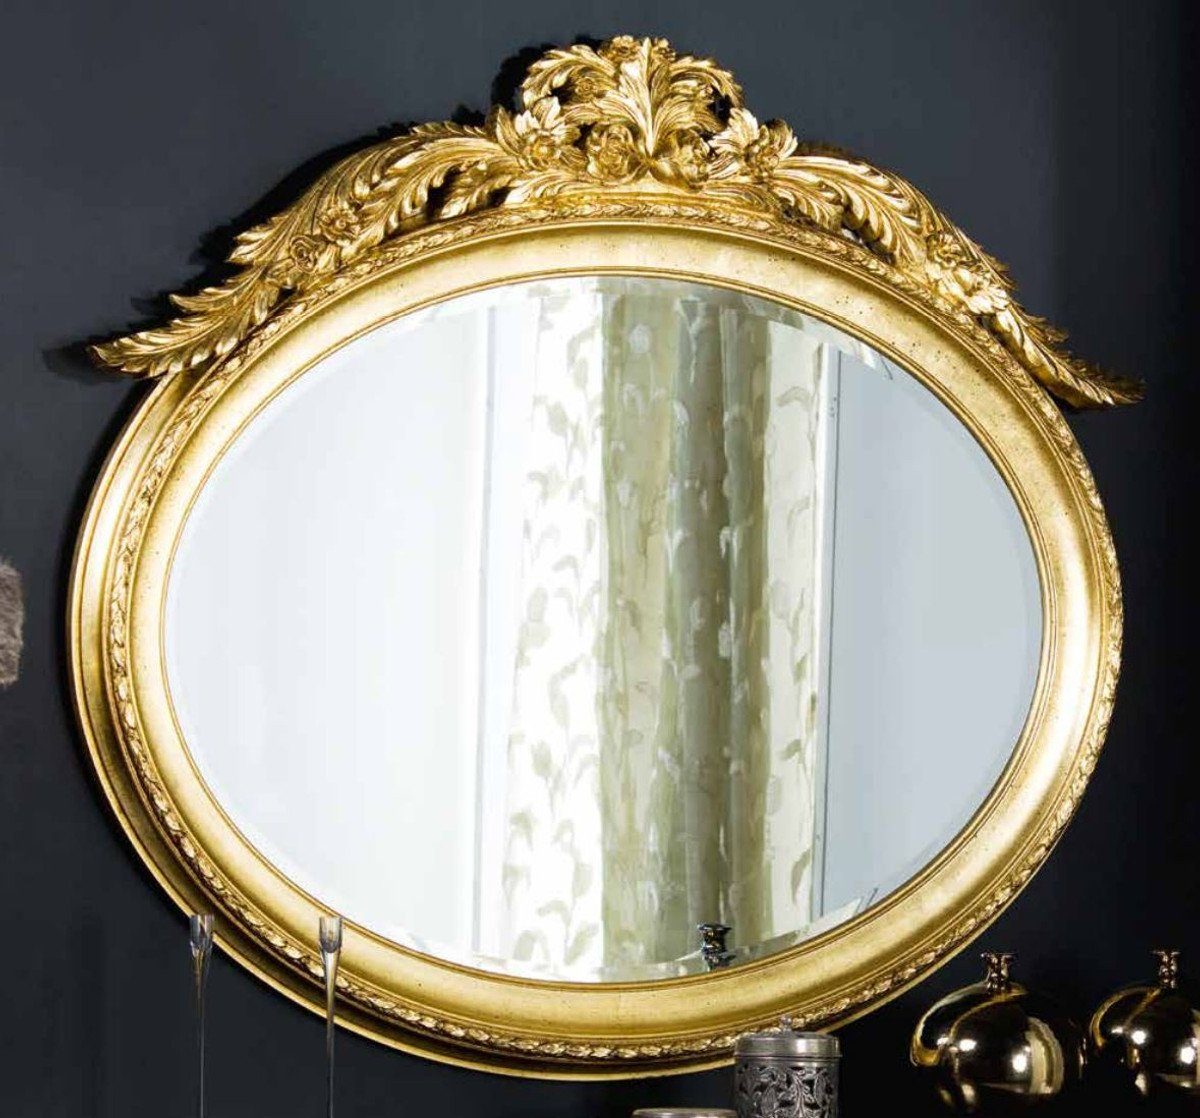 Möbel Luxus Luxus in Qualität - Barockstil Gold Ovaler Made Casa Italy Barock Barock Spiegel - Padrino - Barockspiegel - Wandspiegel im